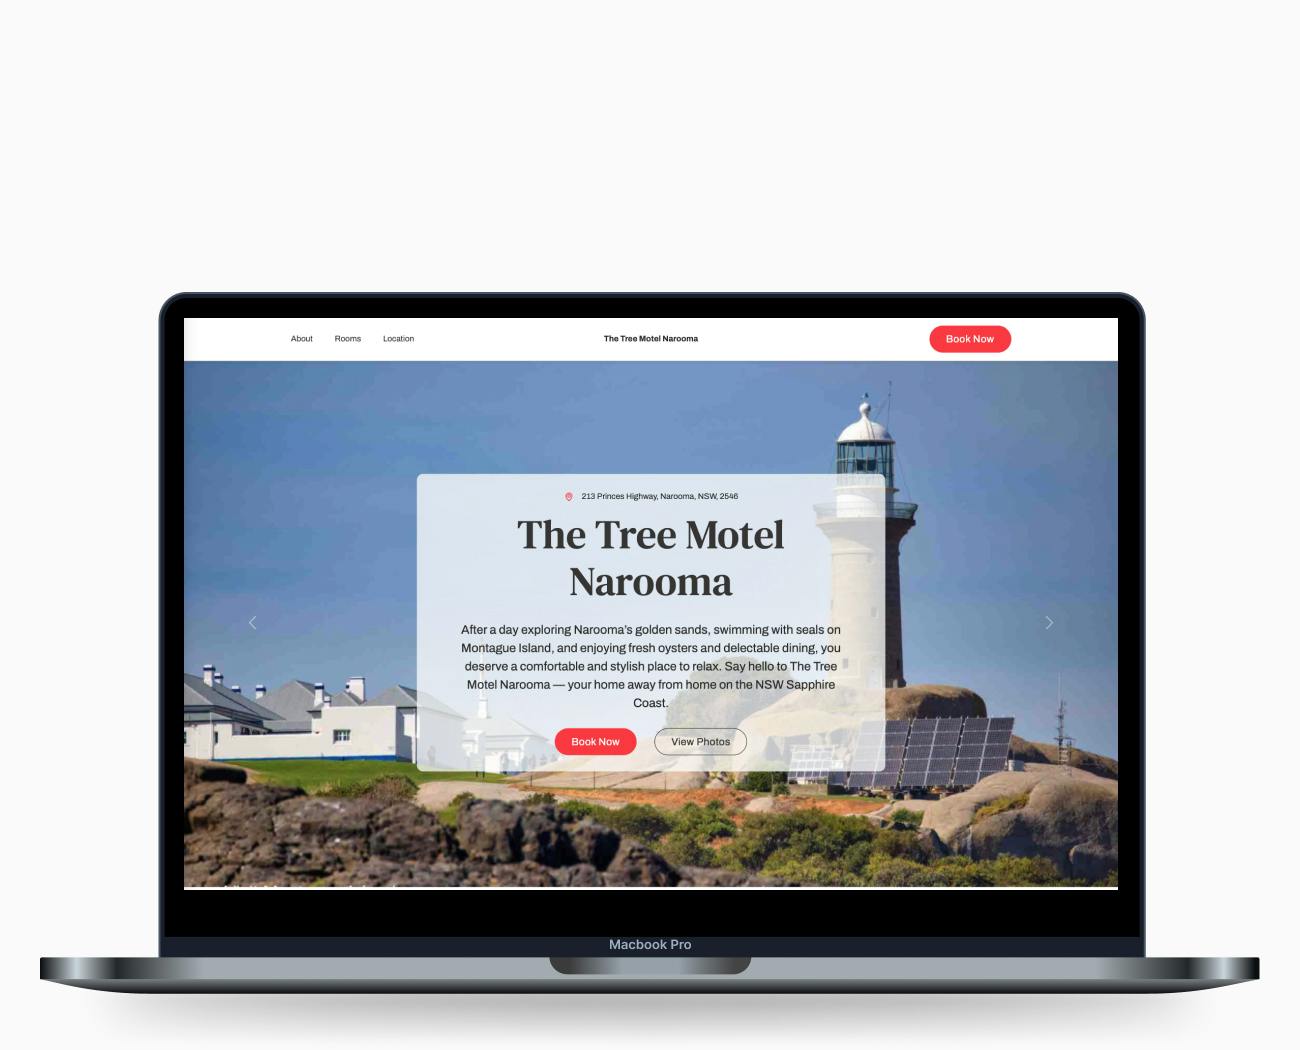 The Tree Motel Narooma - custom designed and built WordPress website by WebKingdom